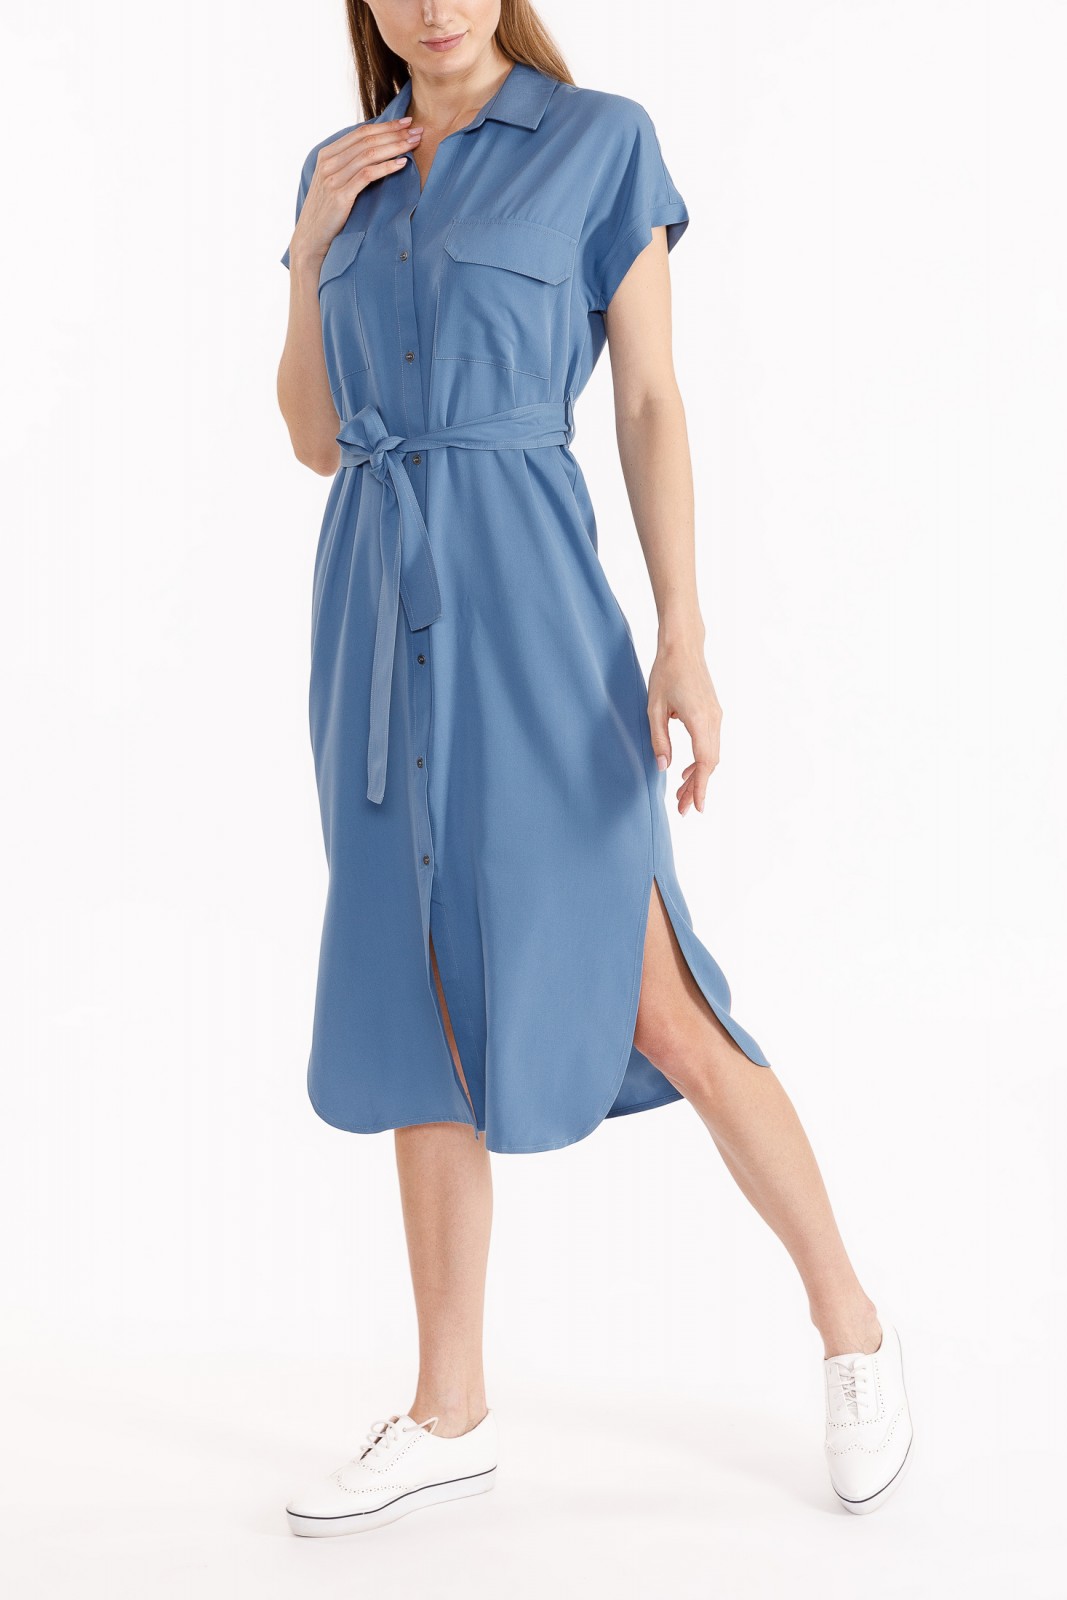 Платье zolla 420258239013, цвет голубой, размер S